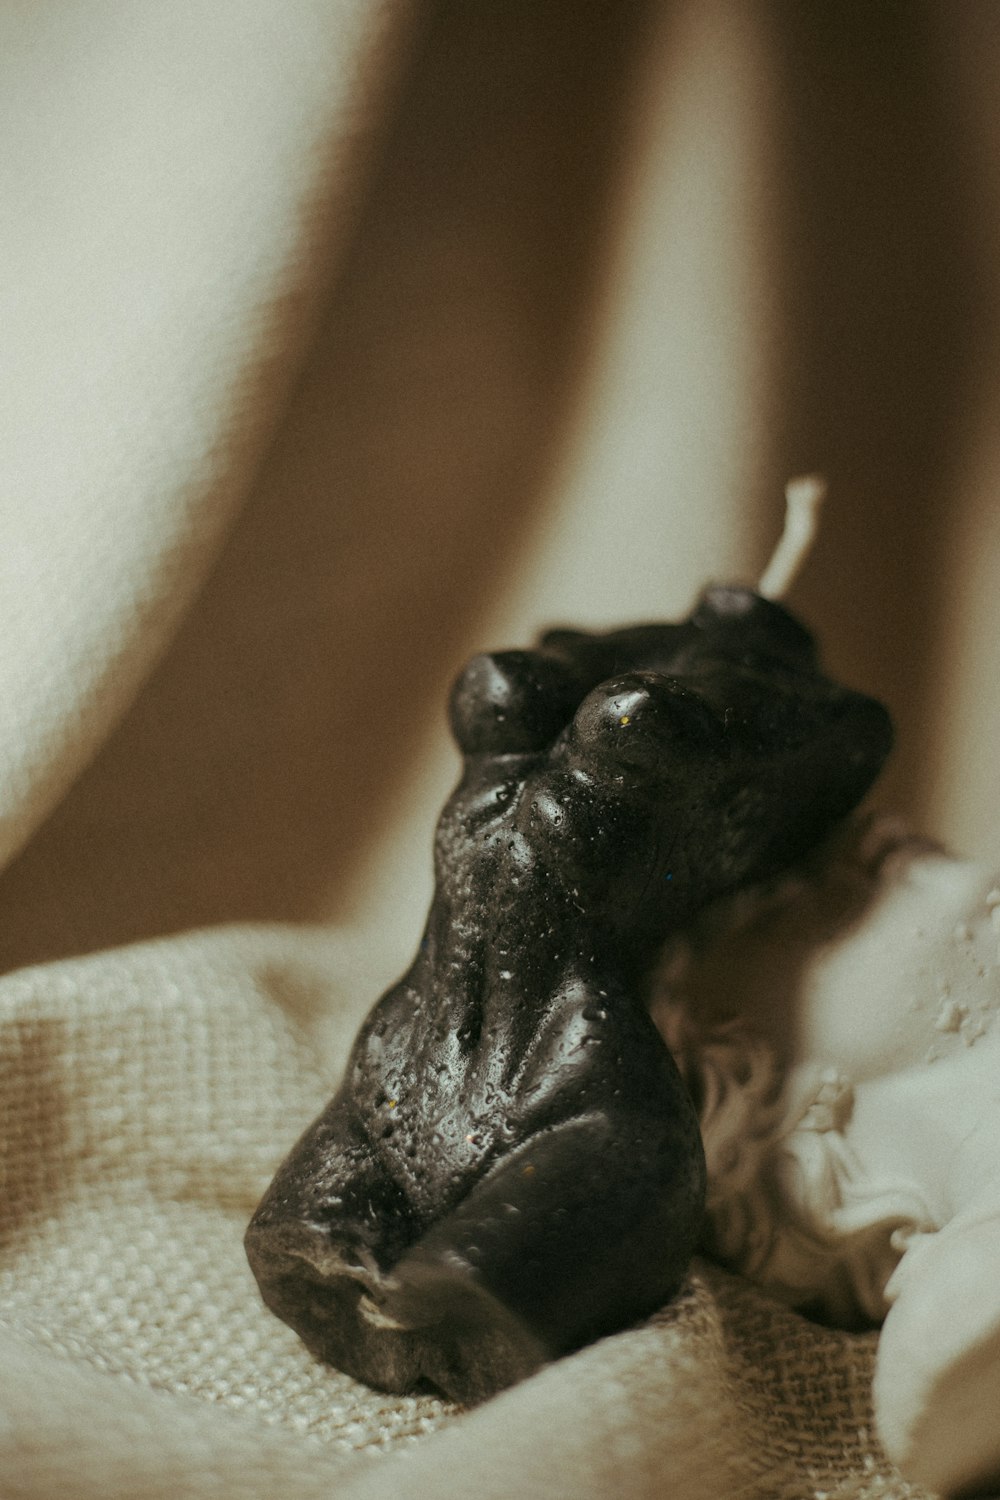 black frog figurine on white textile